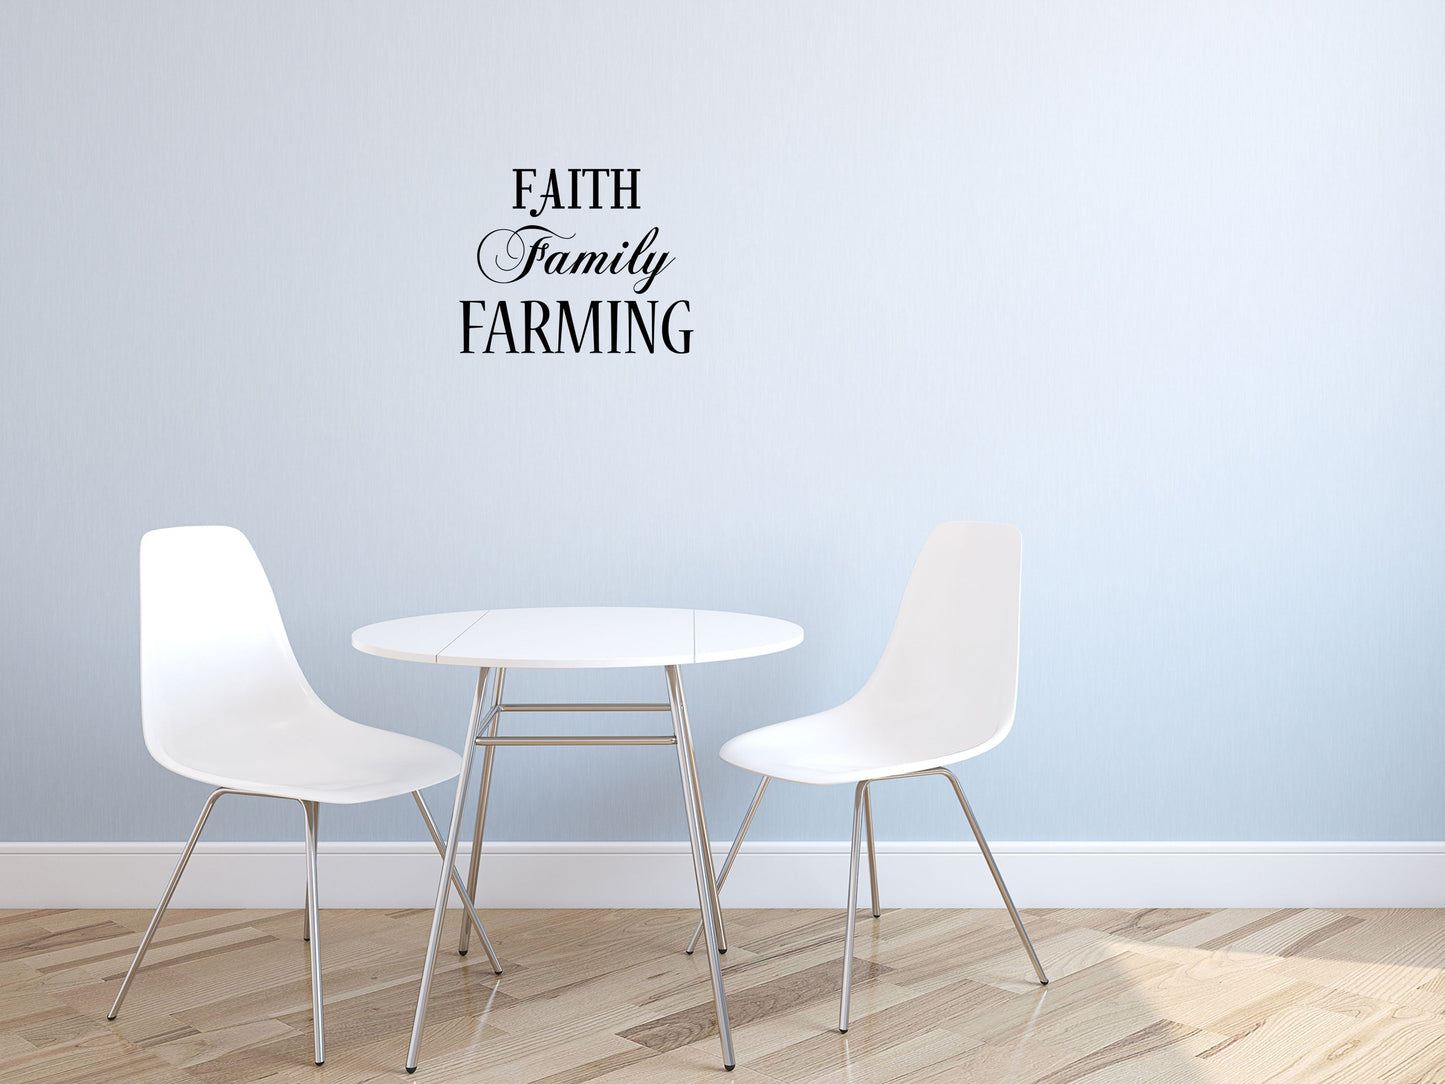 Faith Family Farming Wall Decal Sticker - Farming Decal - Farm Wall Art Vinyl Wall Decal Inspirational Wall Signs 